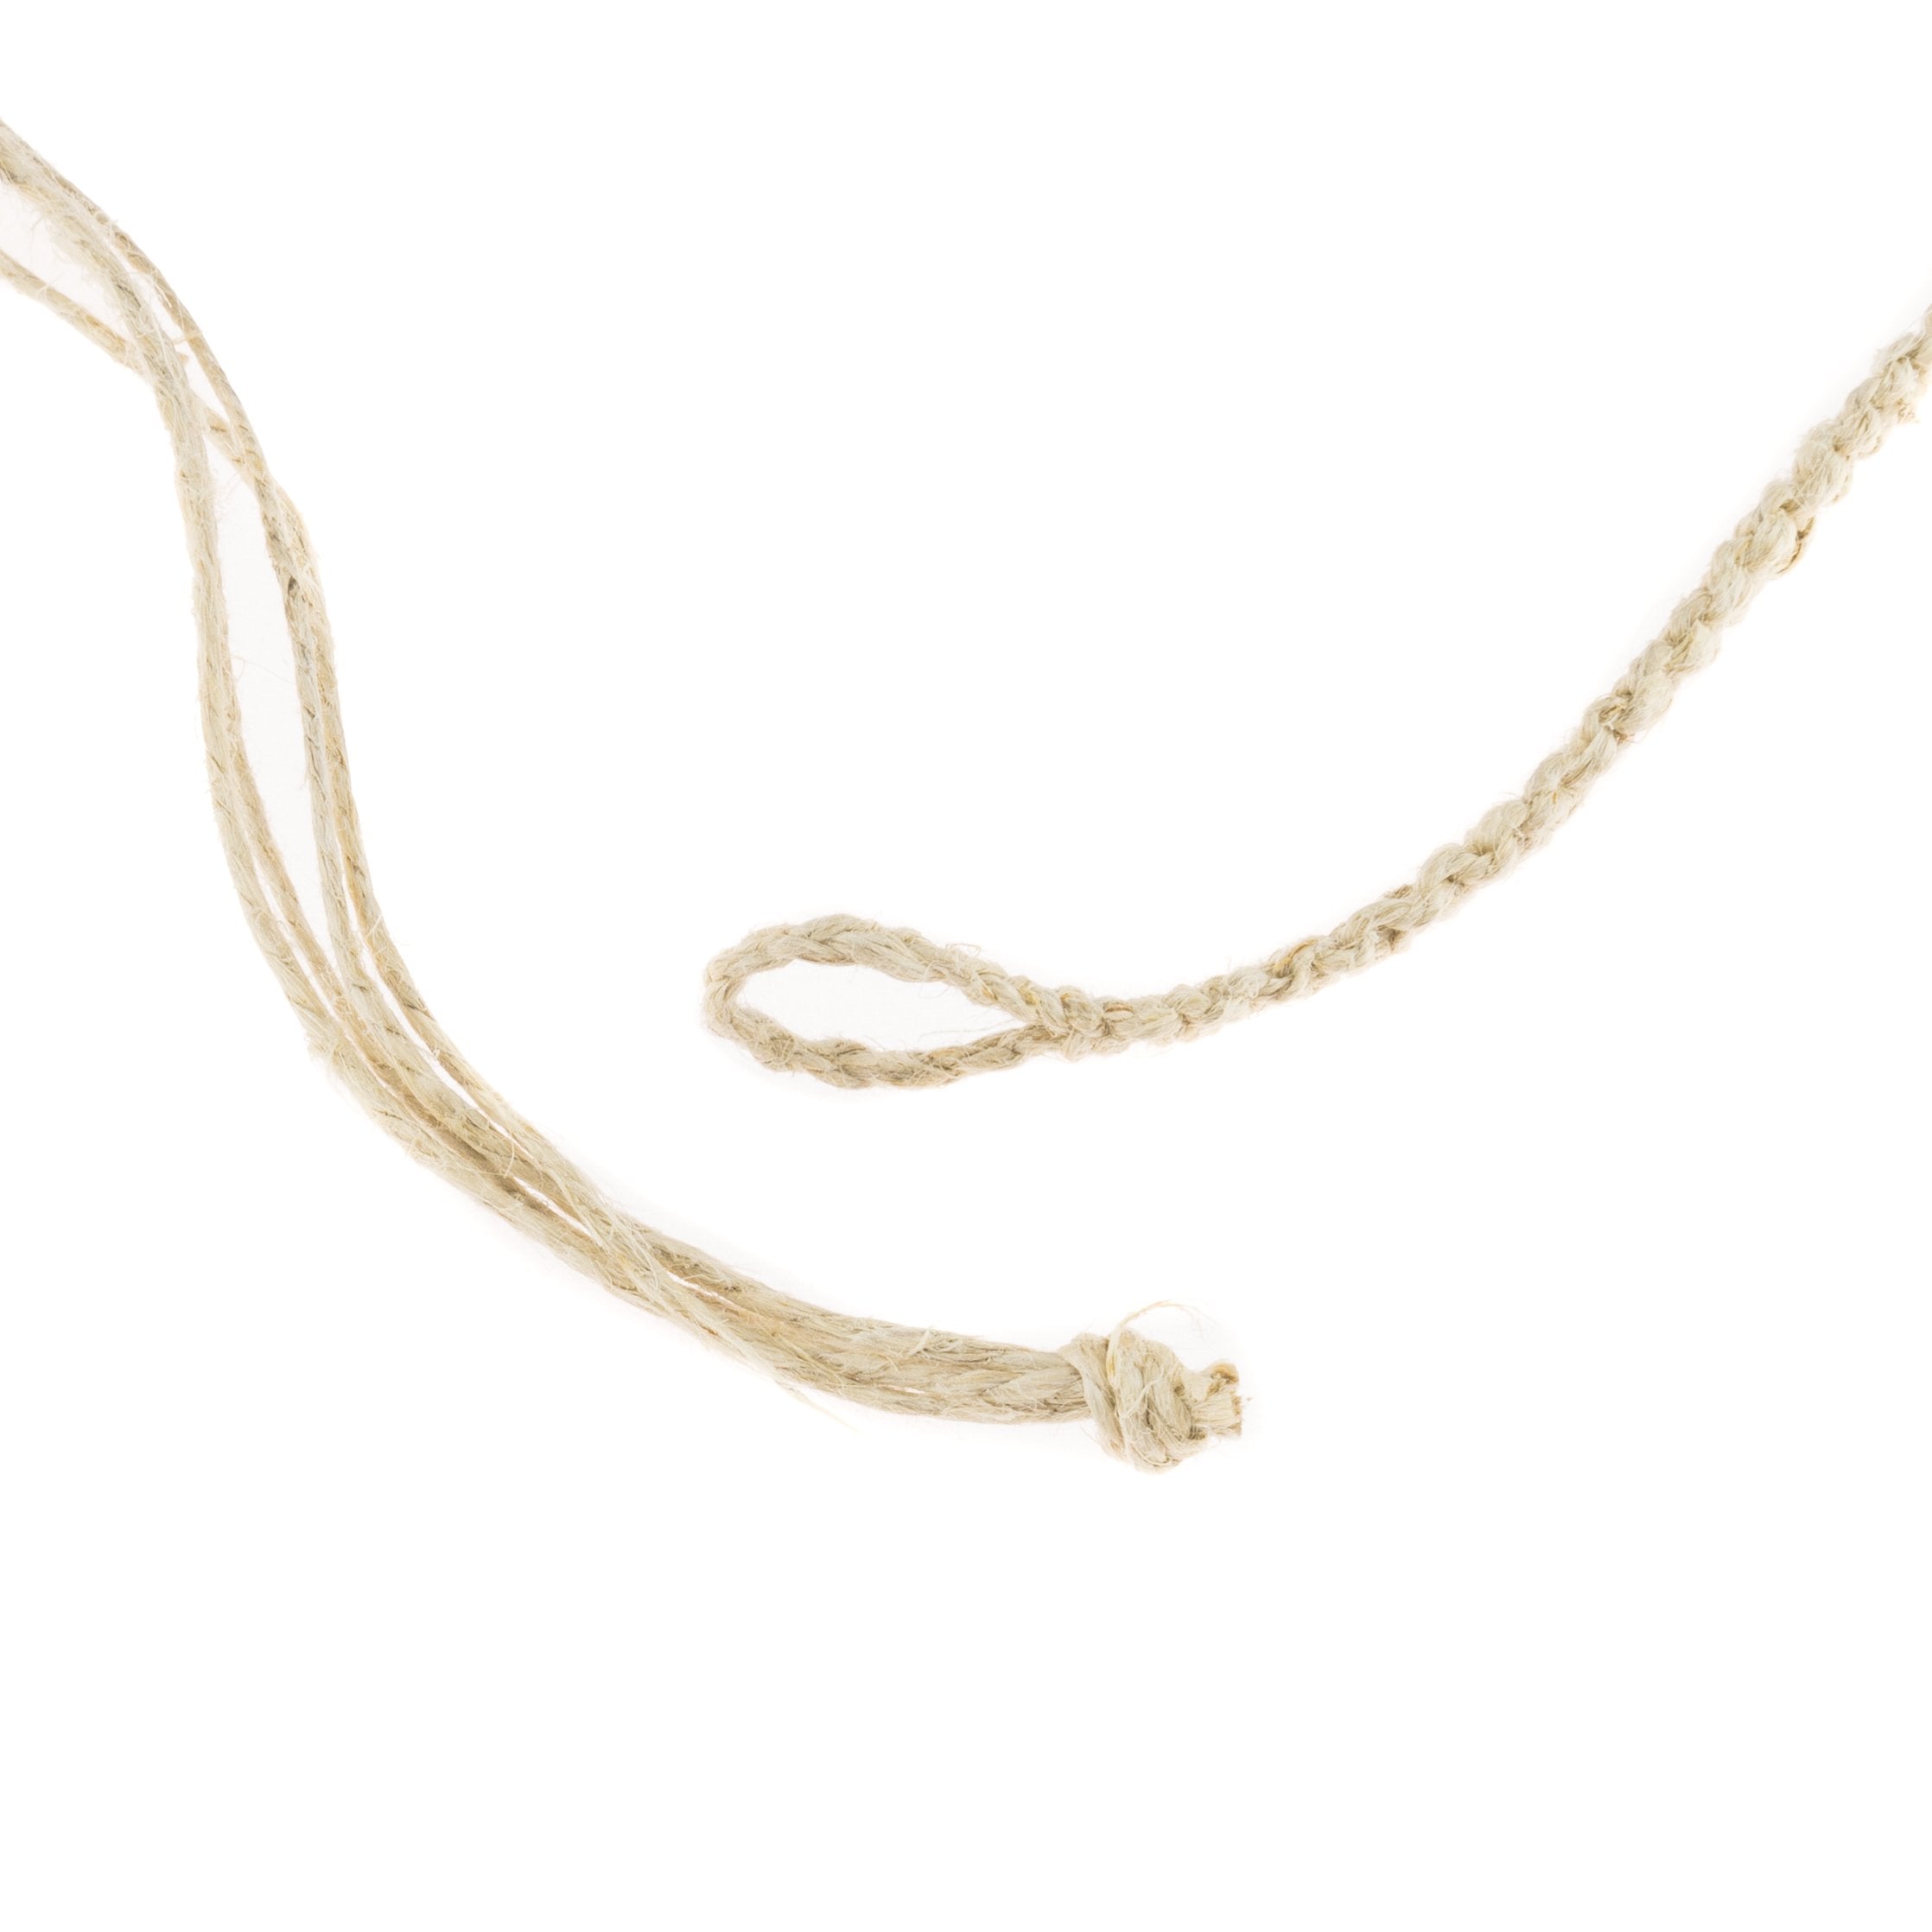 1"+ Shark Tooth Pendant on Hemp and Puka Shell Beads Necklace